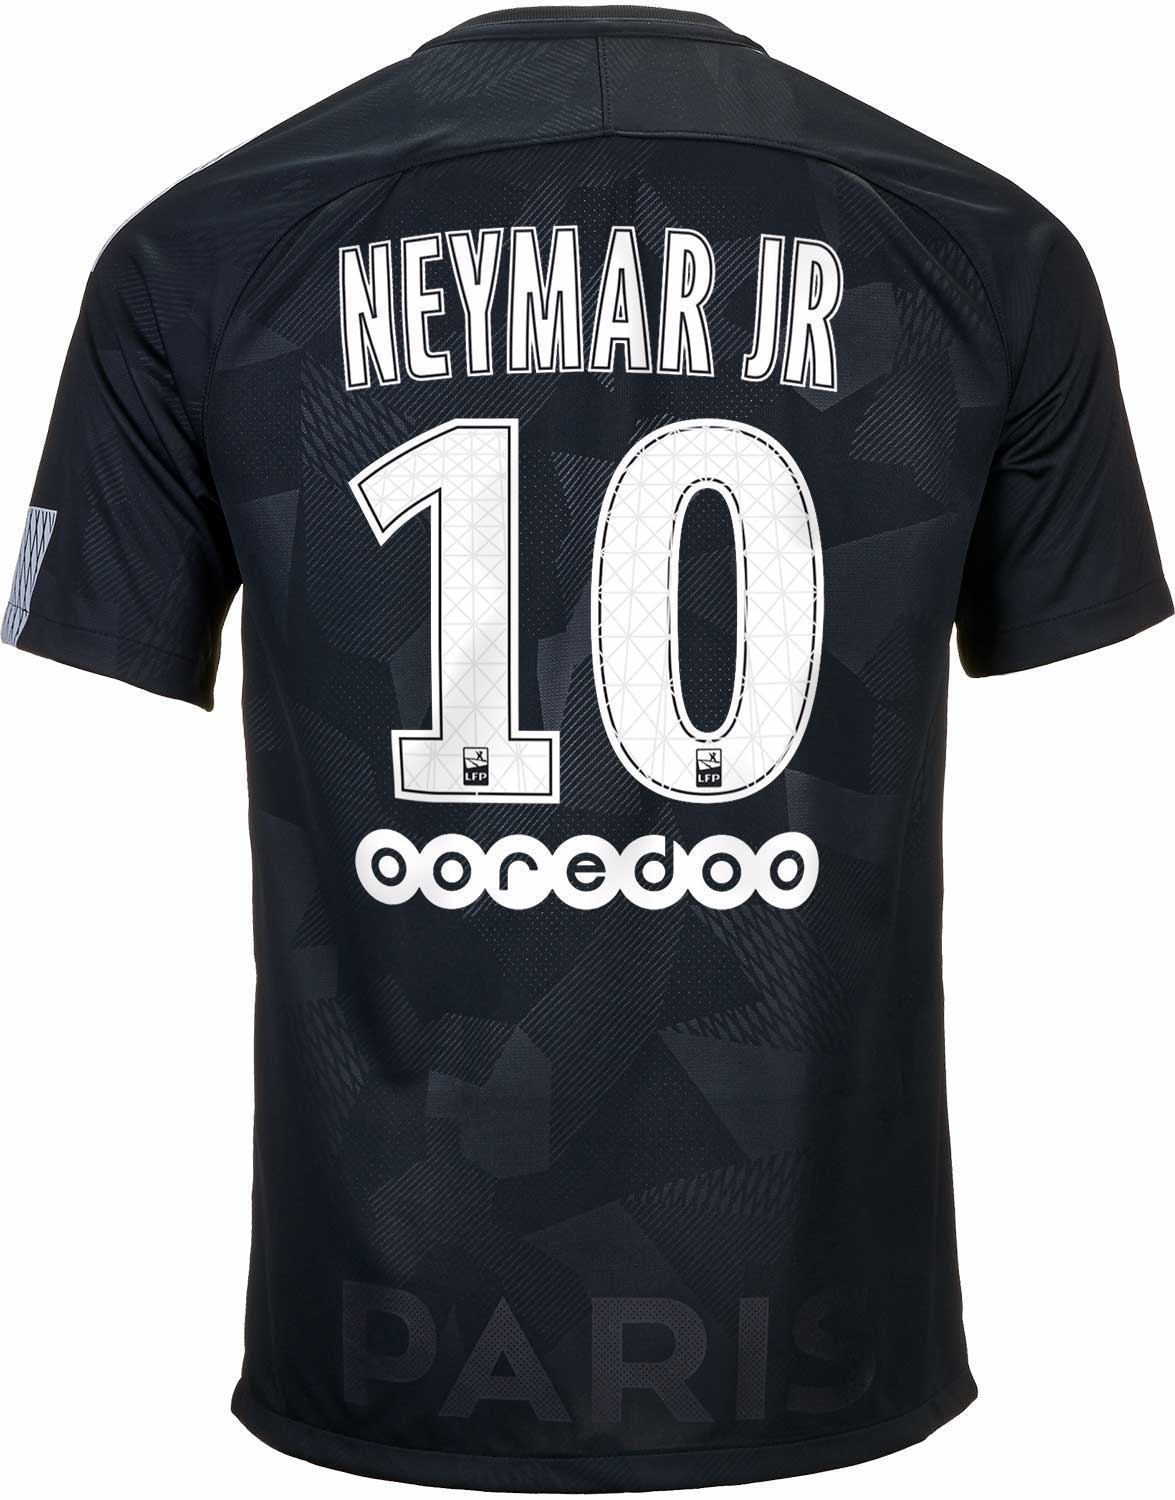 neymar jersey black